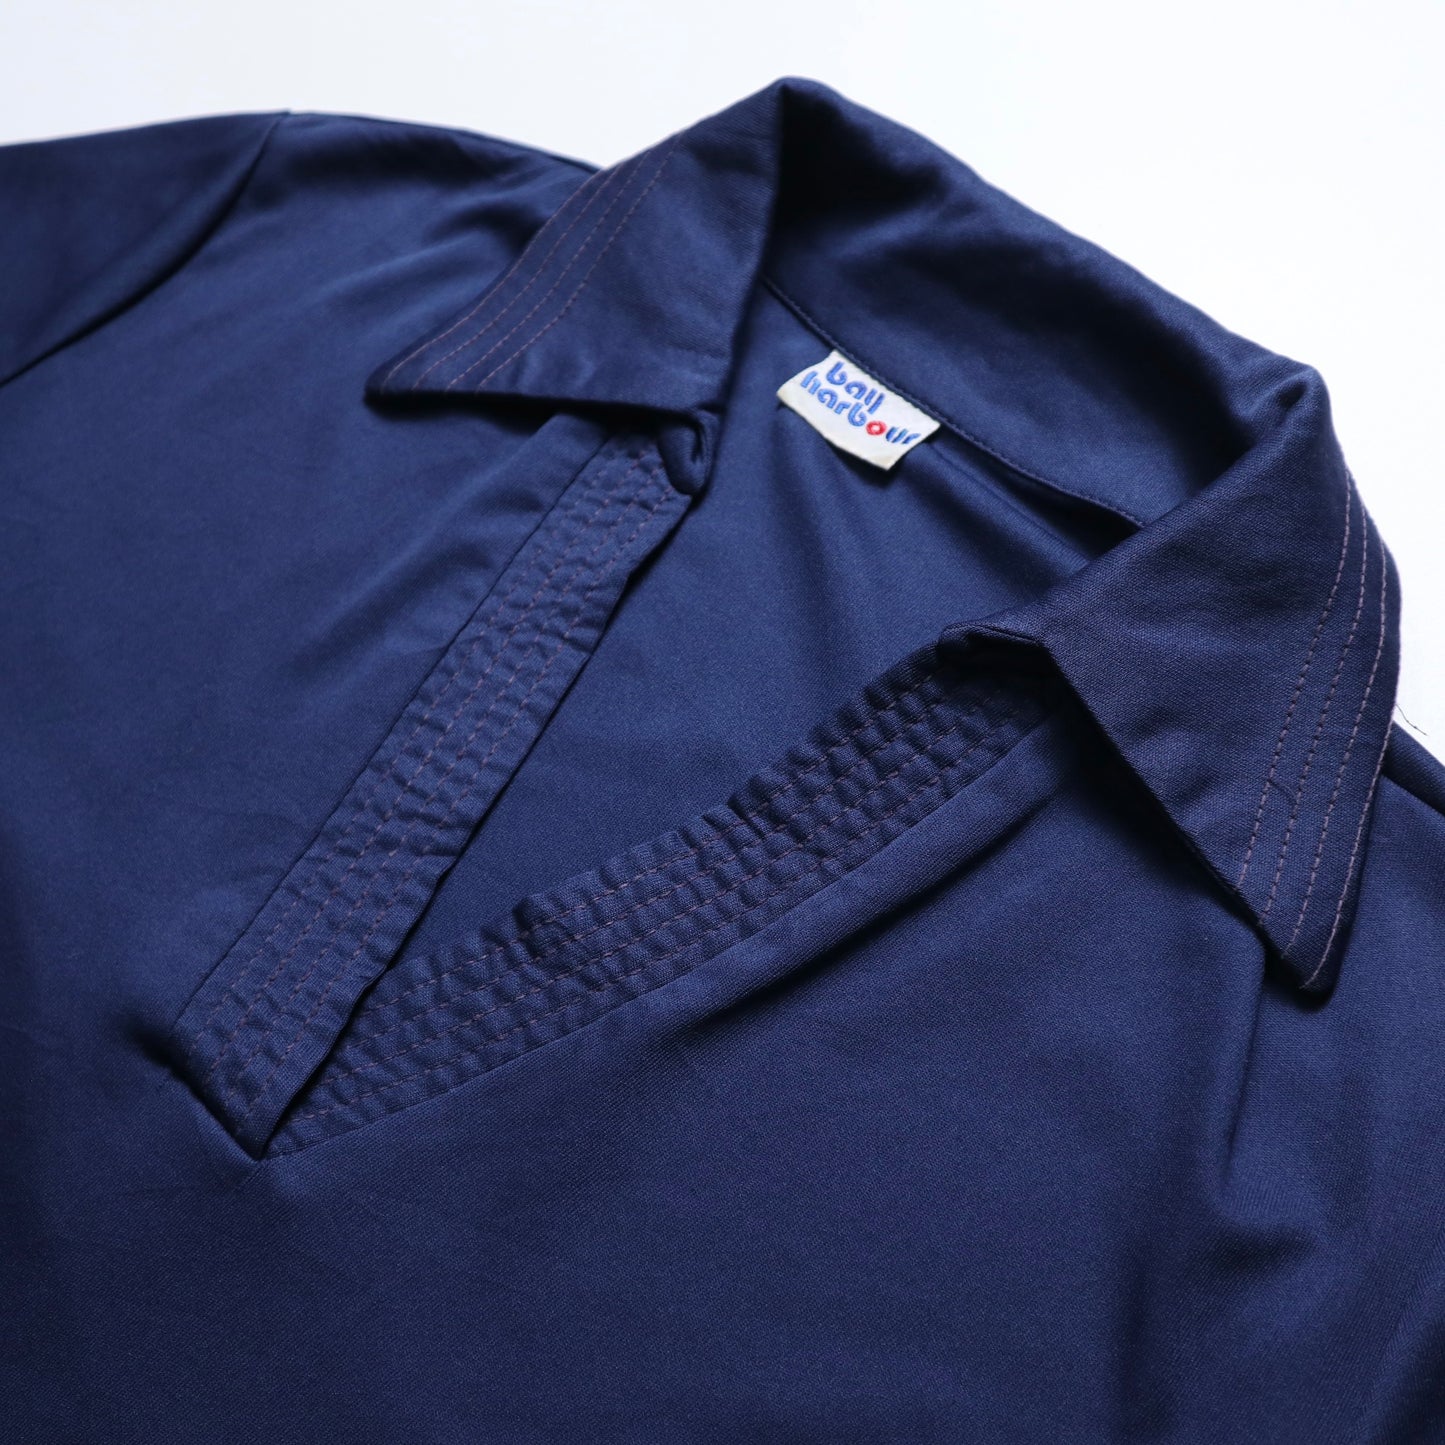 70-80s modern style arrow collar cardigan shirt